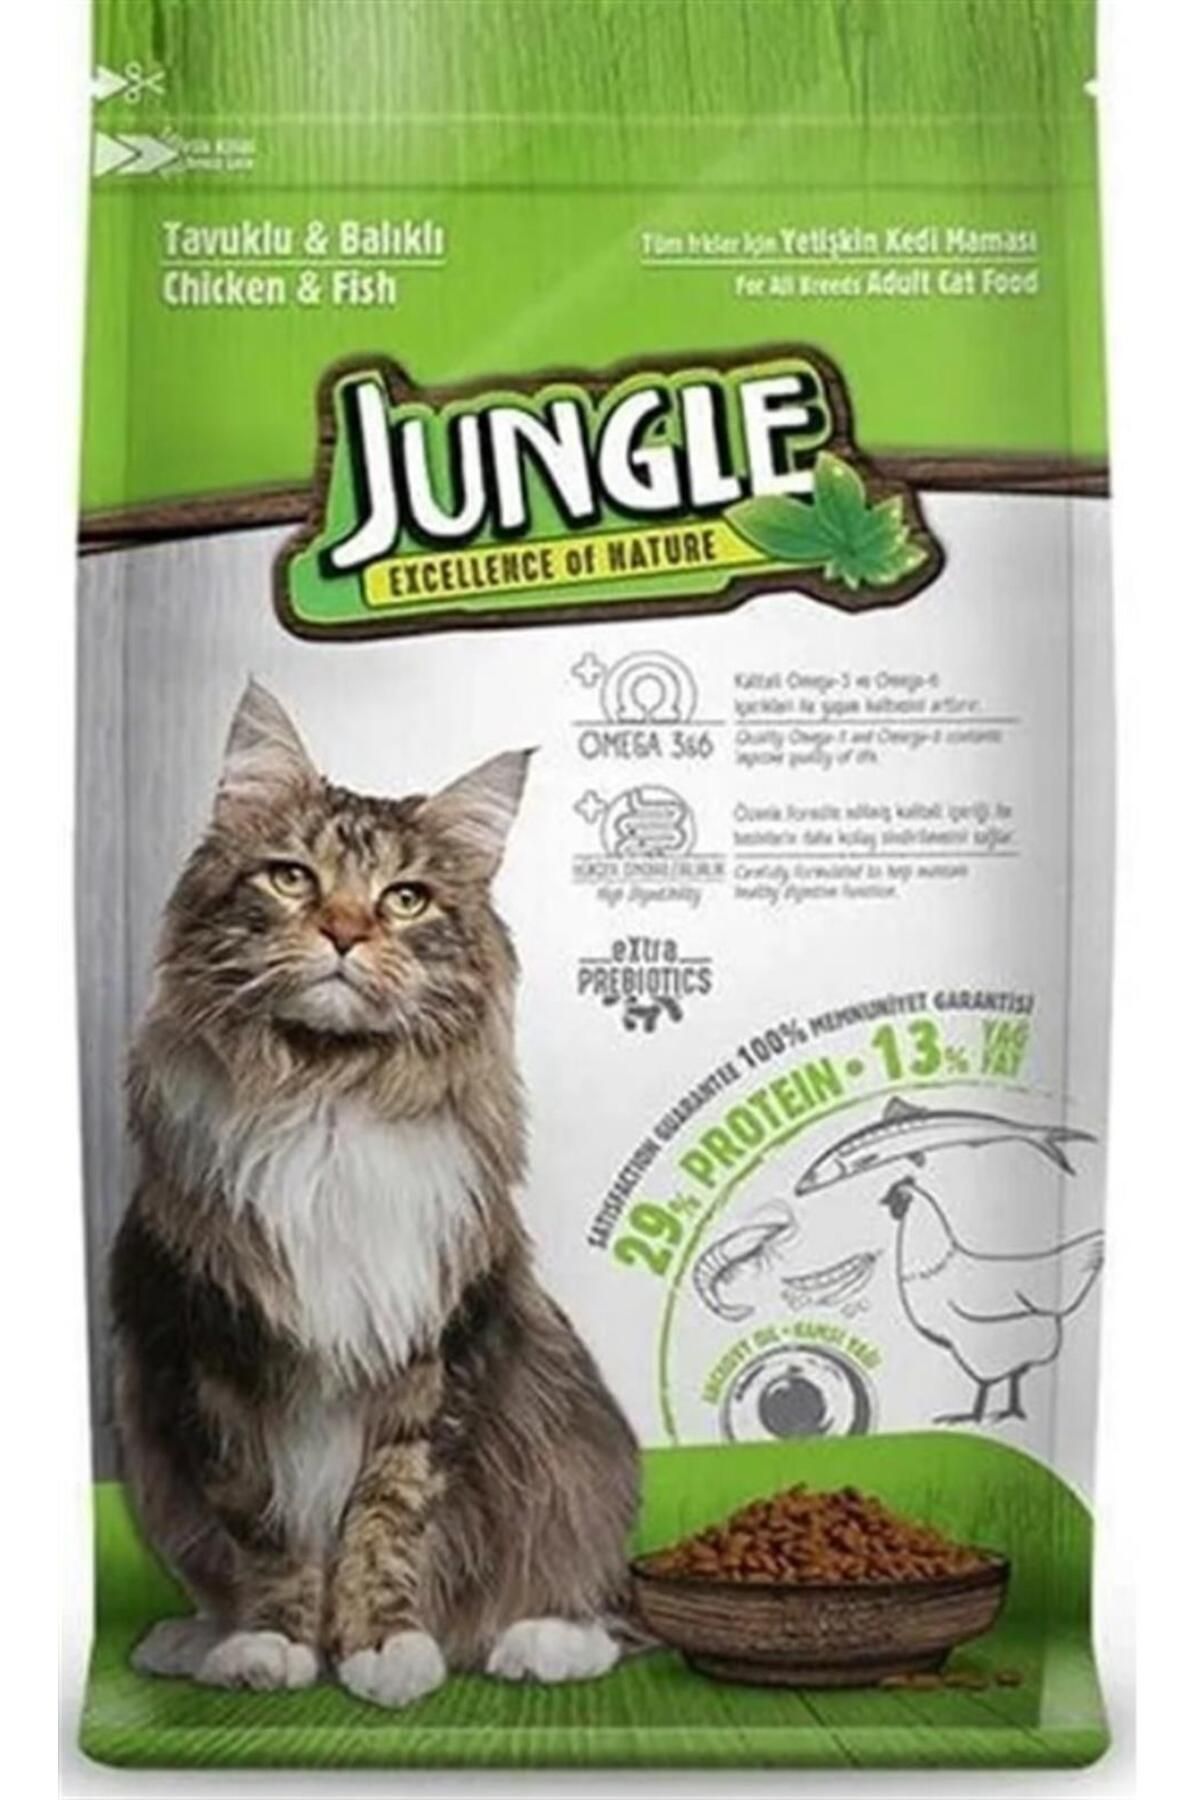 Jungle Tavuklu Balıklı Kedi Maması 15 Kg